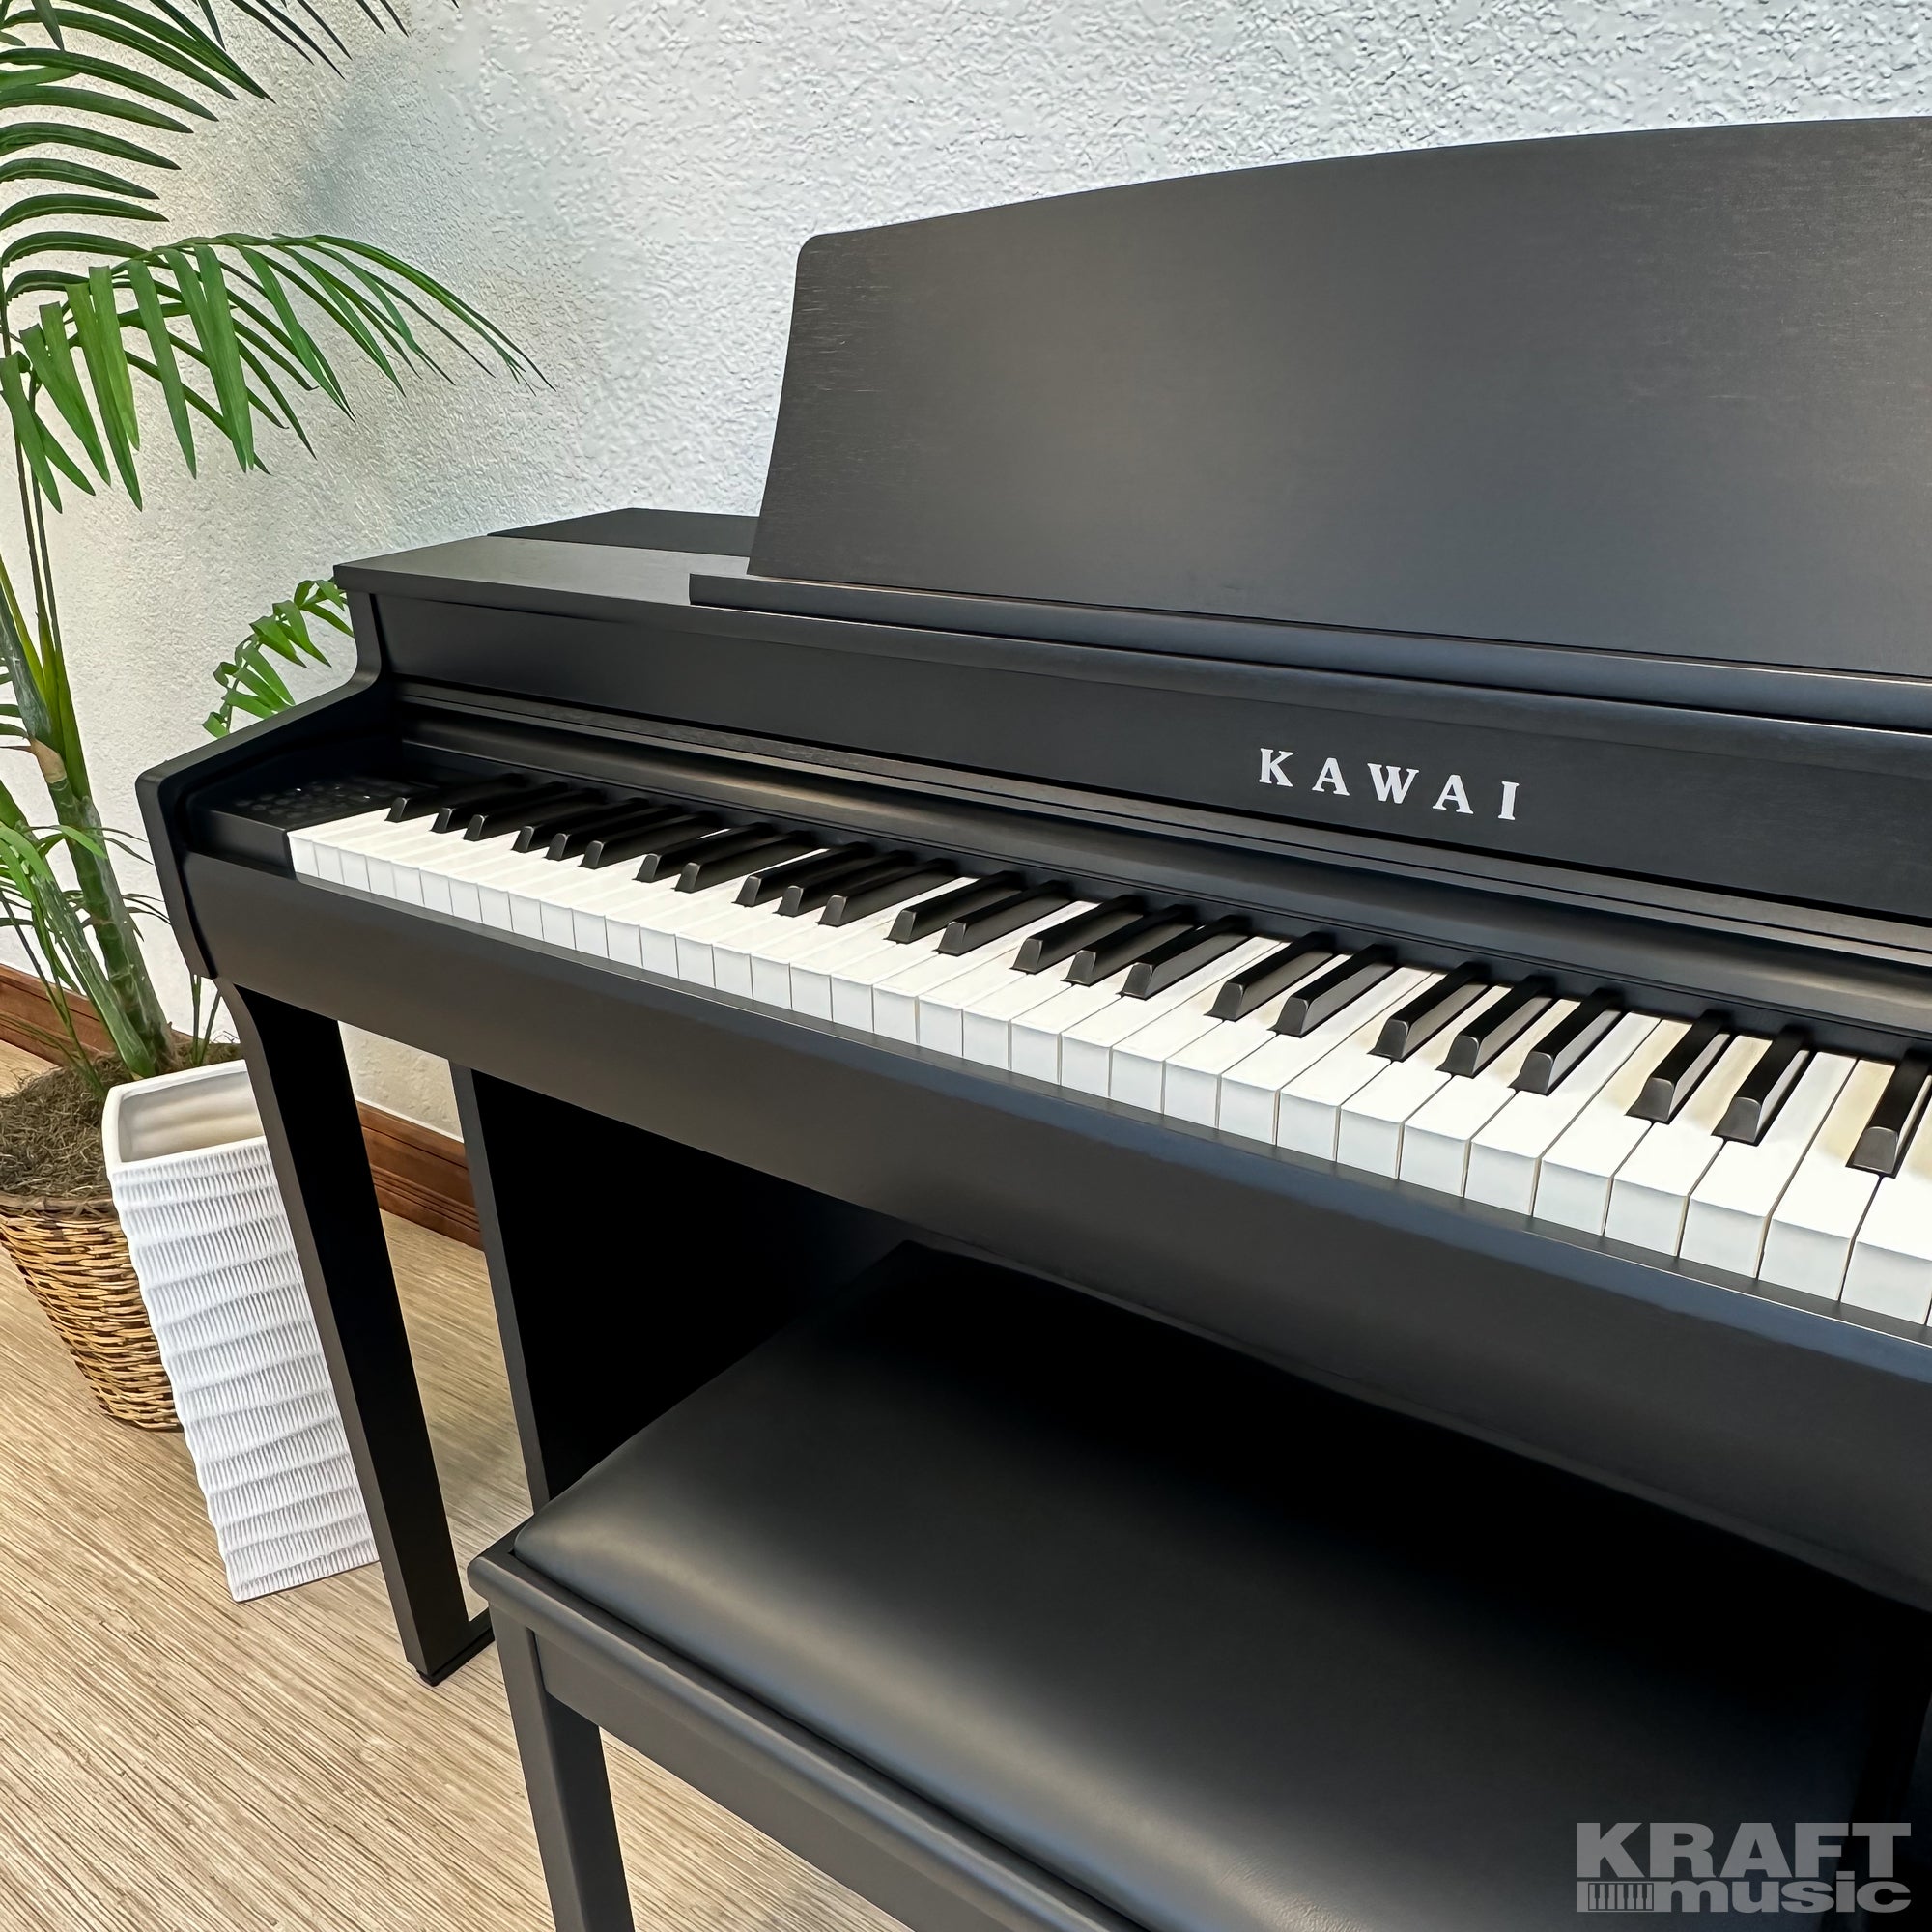 Kawai CN301 Digital Piano - Satin Black - Angle shot down the keys